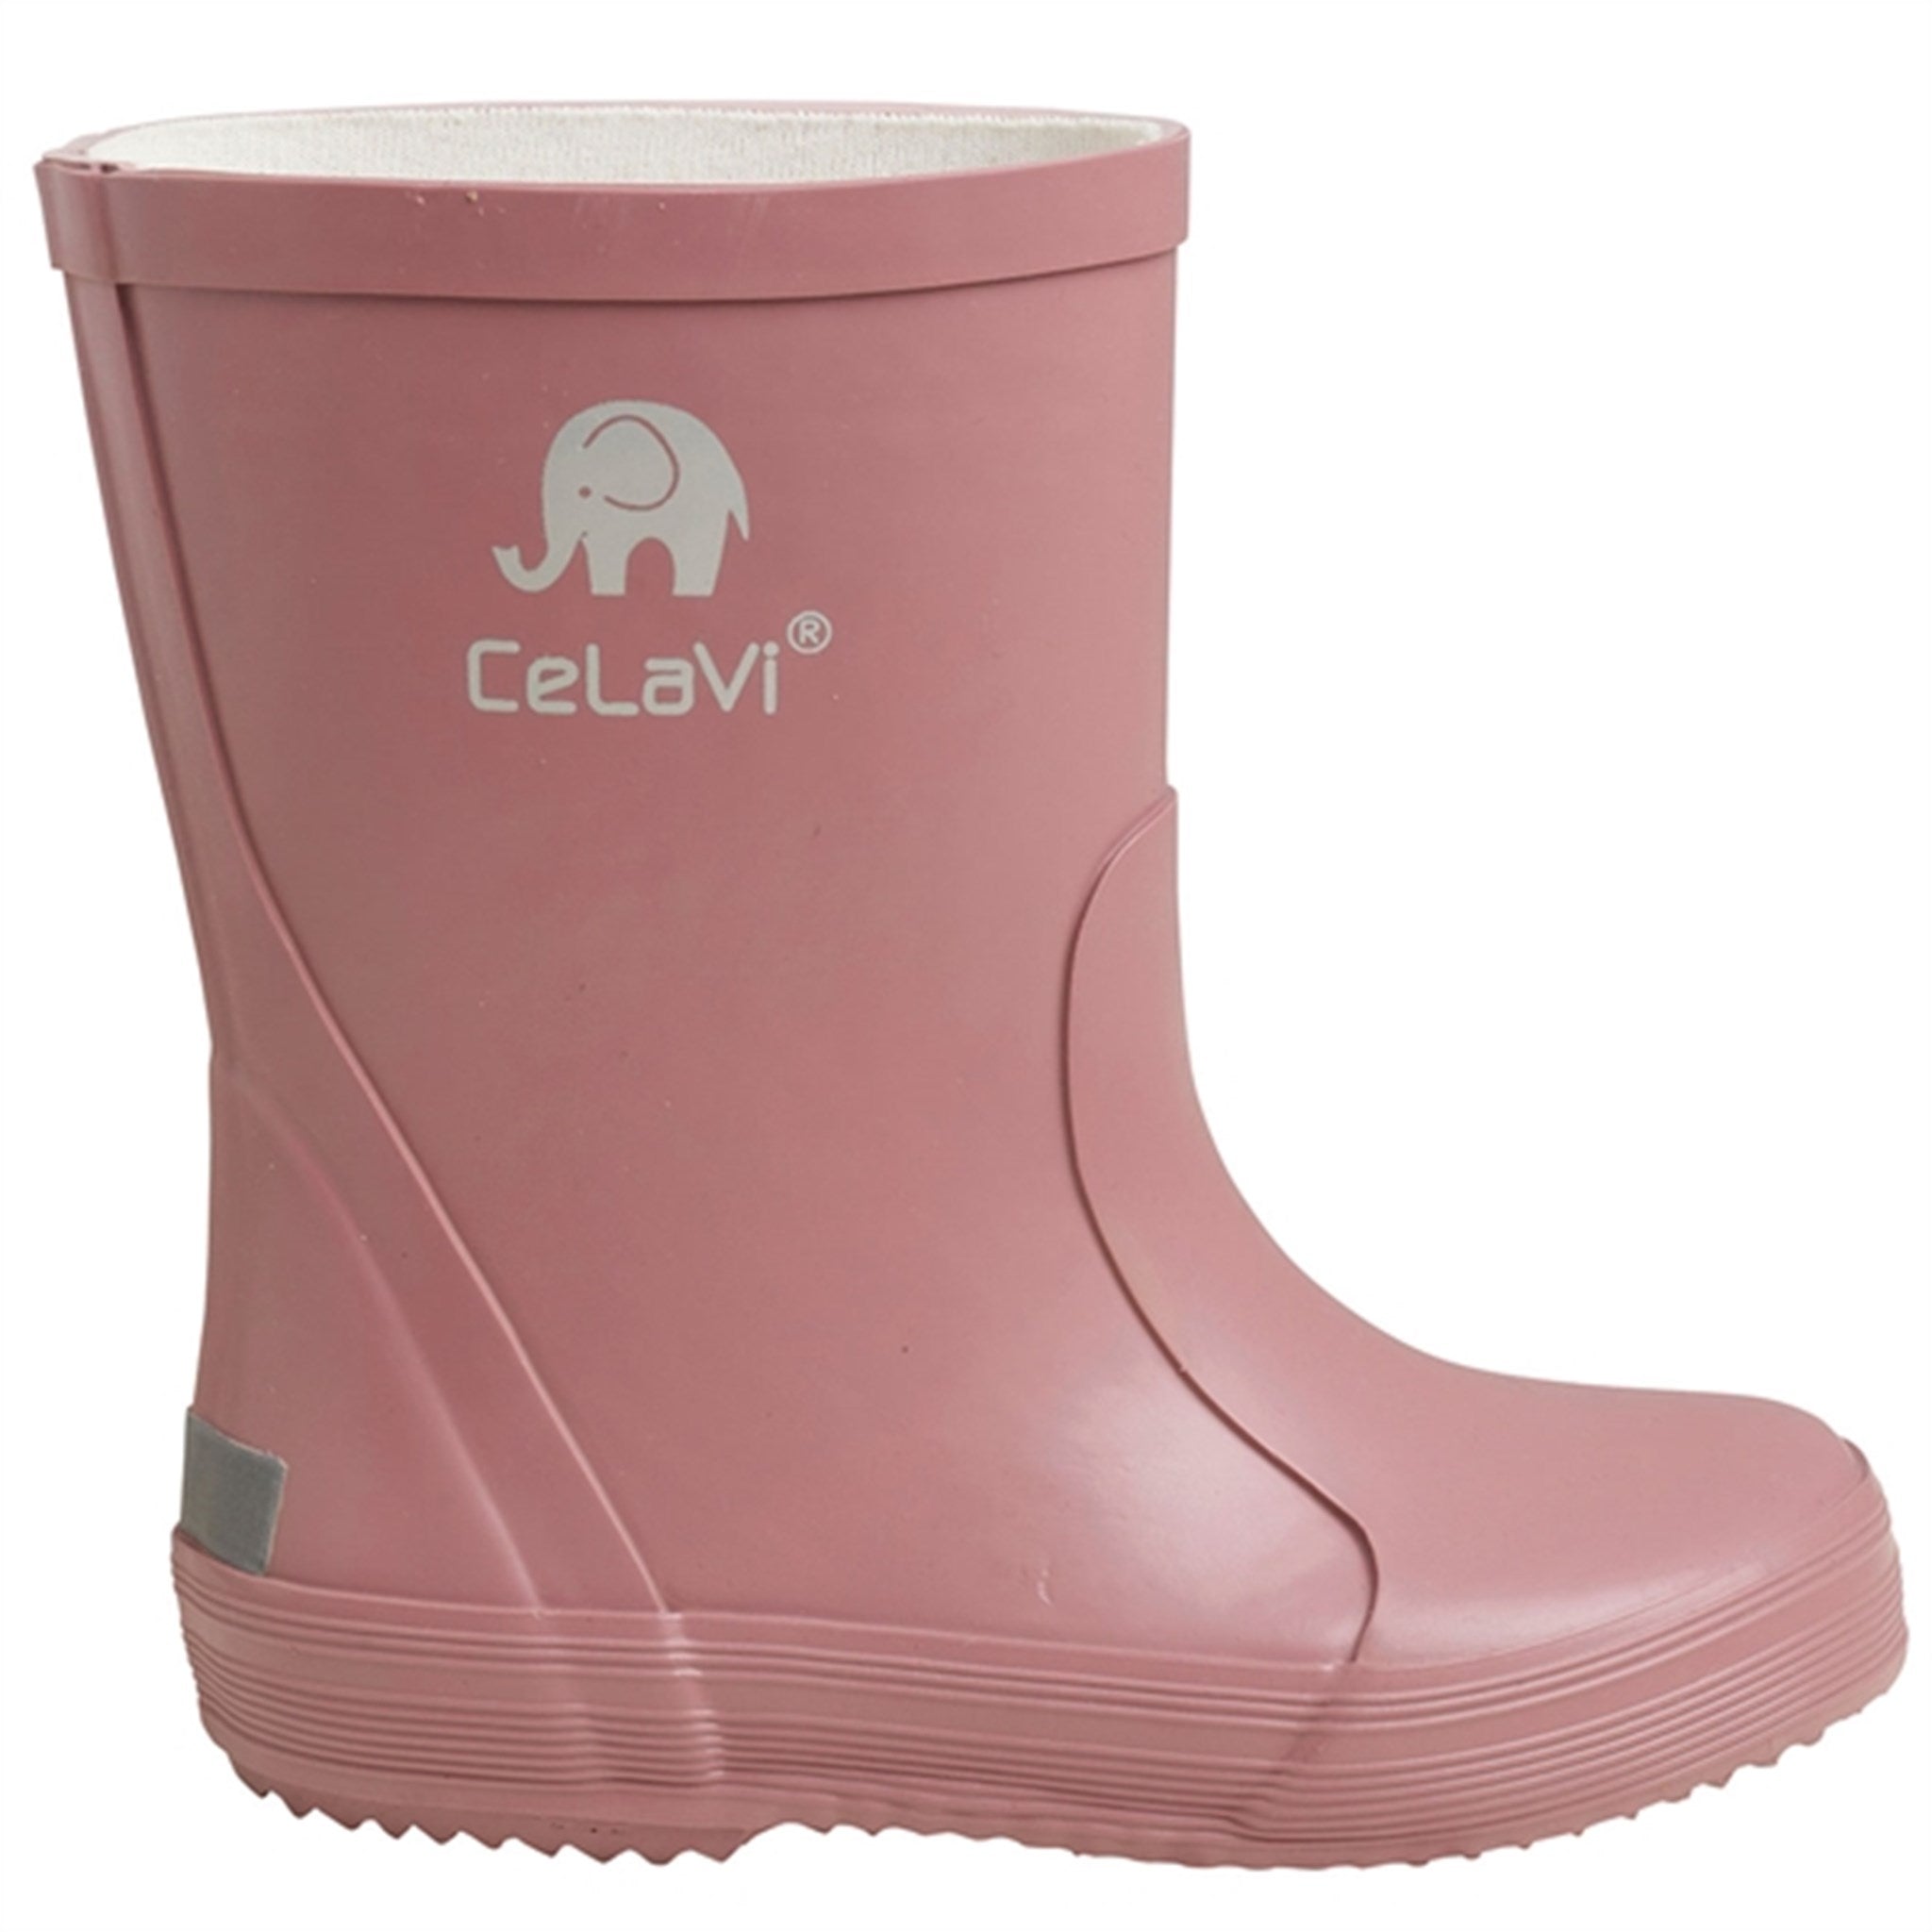 CeLaVi Wellies New Basic Boot Burlwood 2